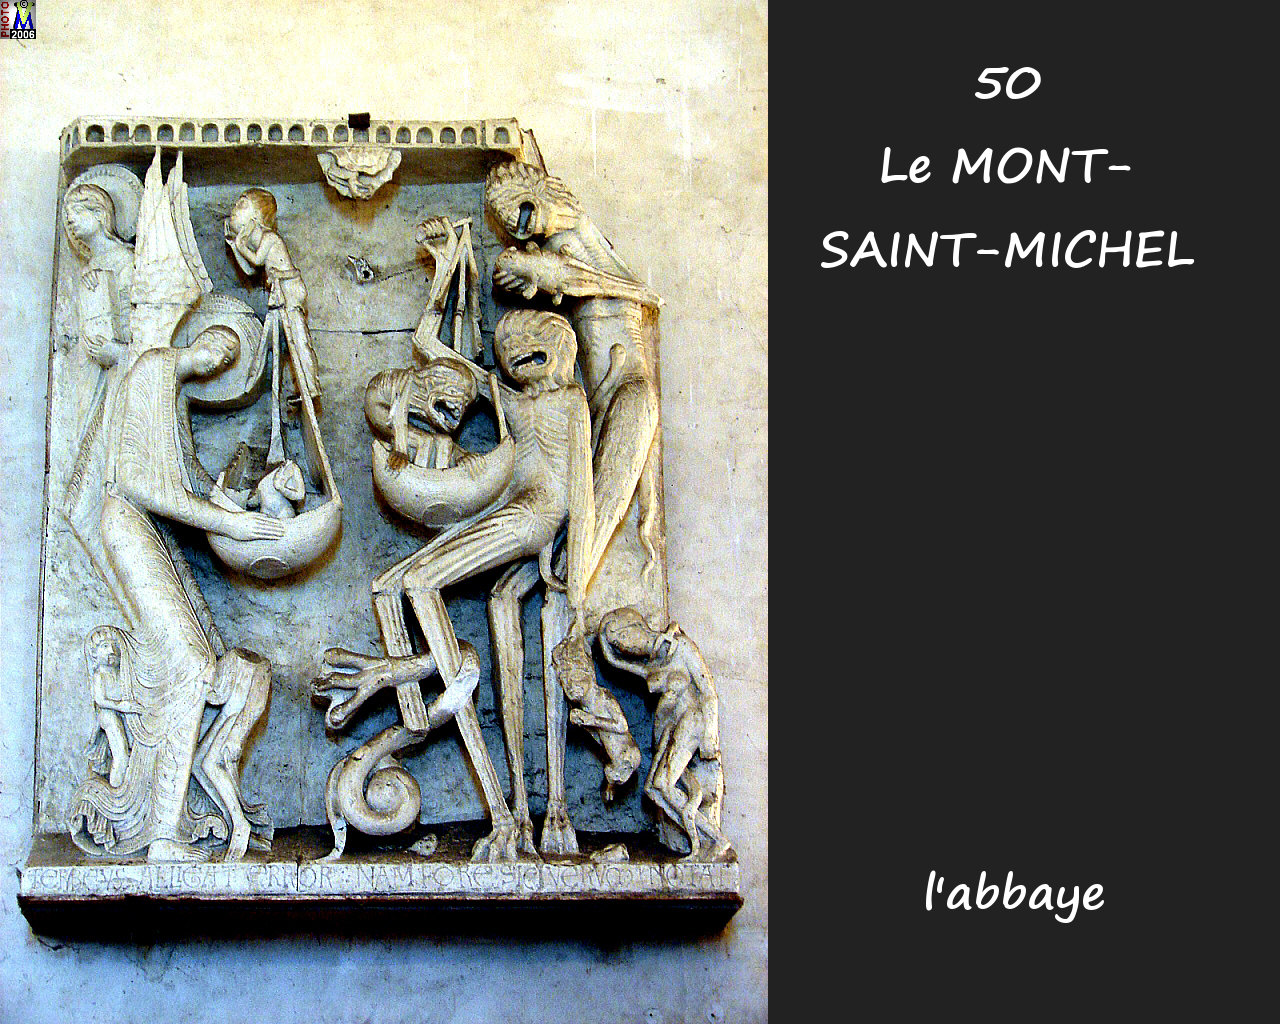 50LE-MONT-ST-MICHEL_abbaye_502.jpg